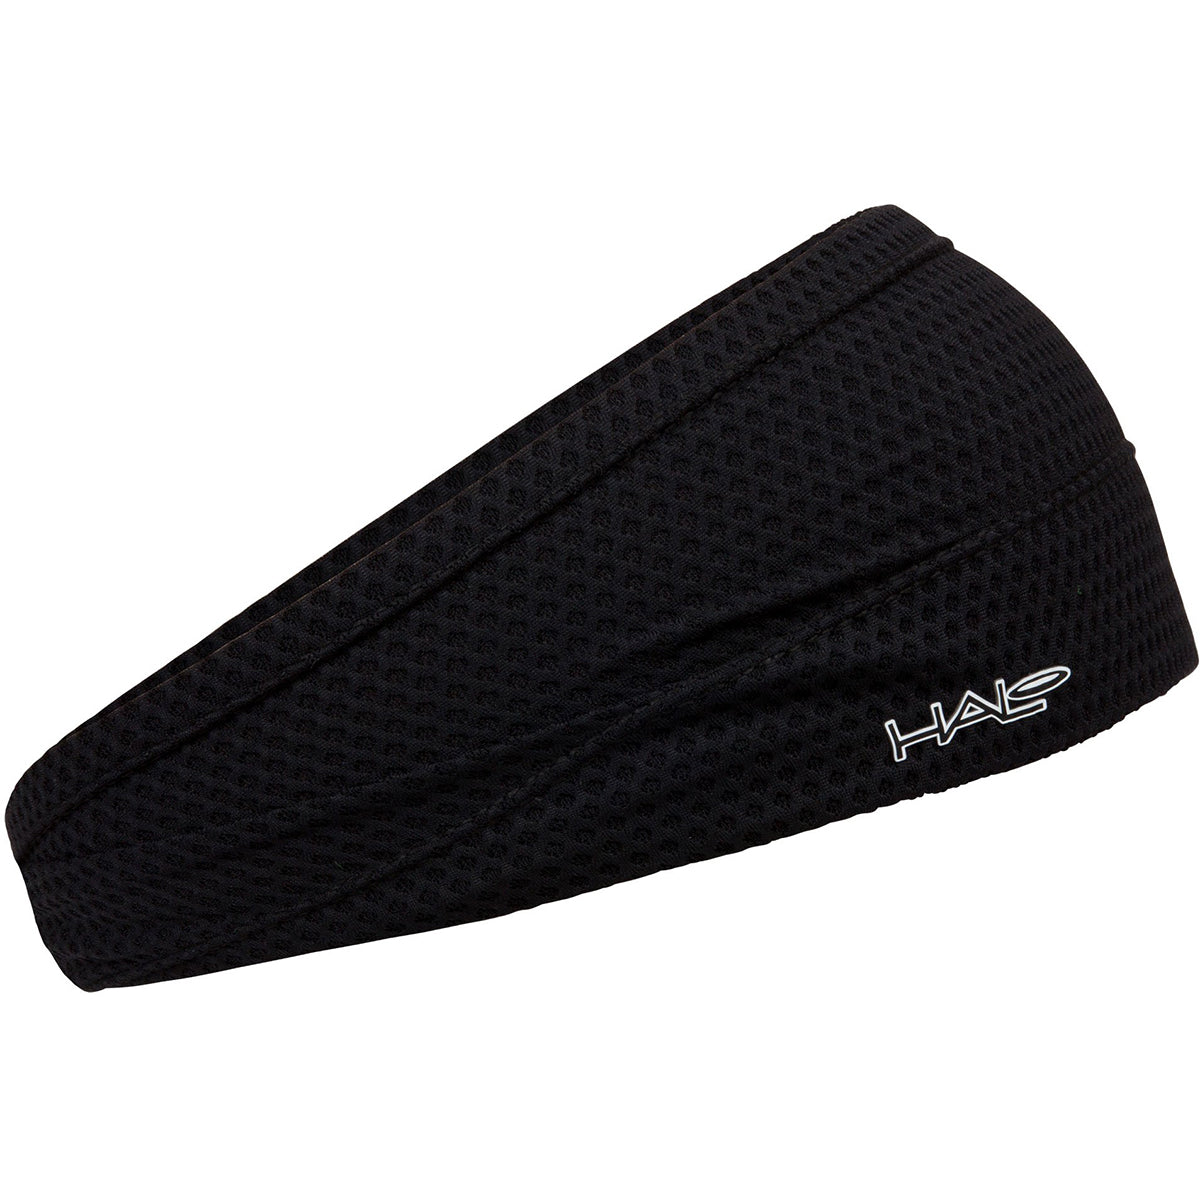 Halo Headband AIR Bandit 4" Wide Pullover Sweatband Halo